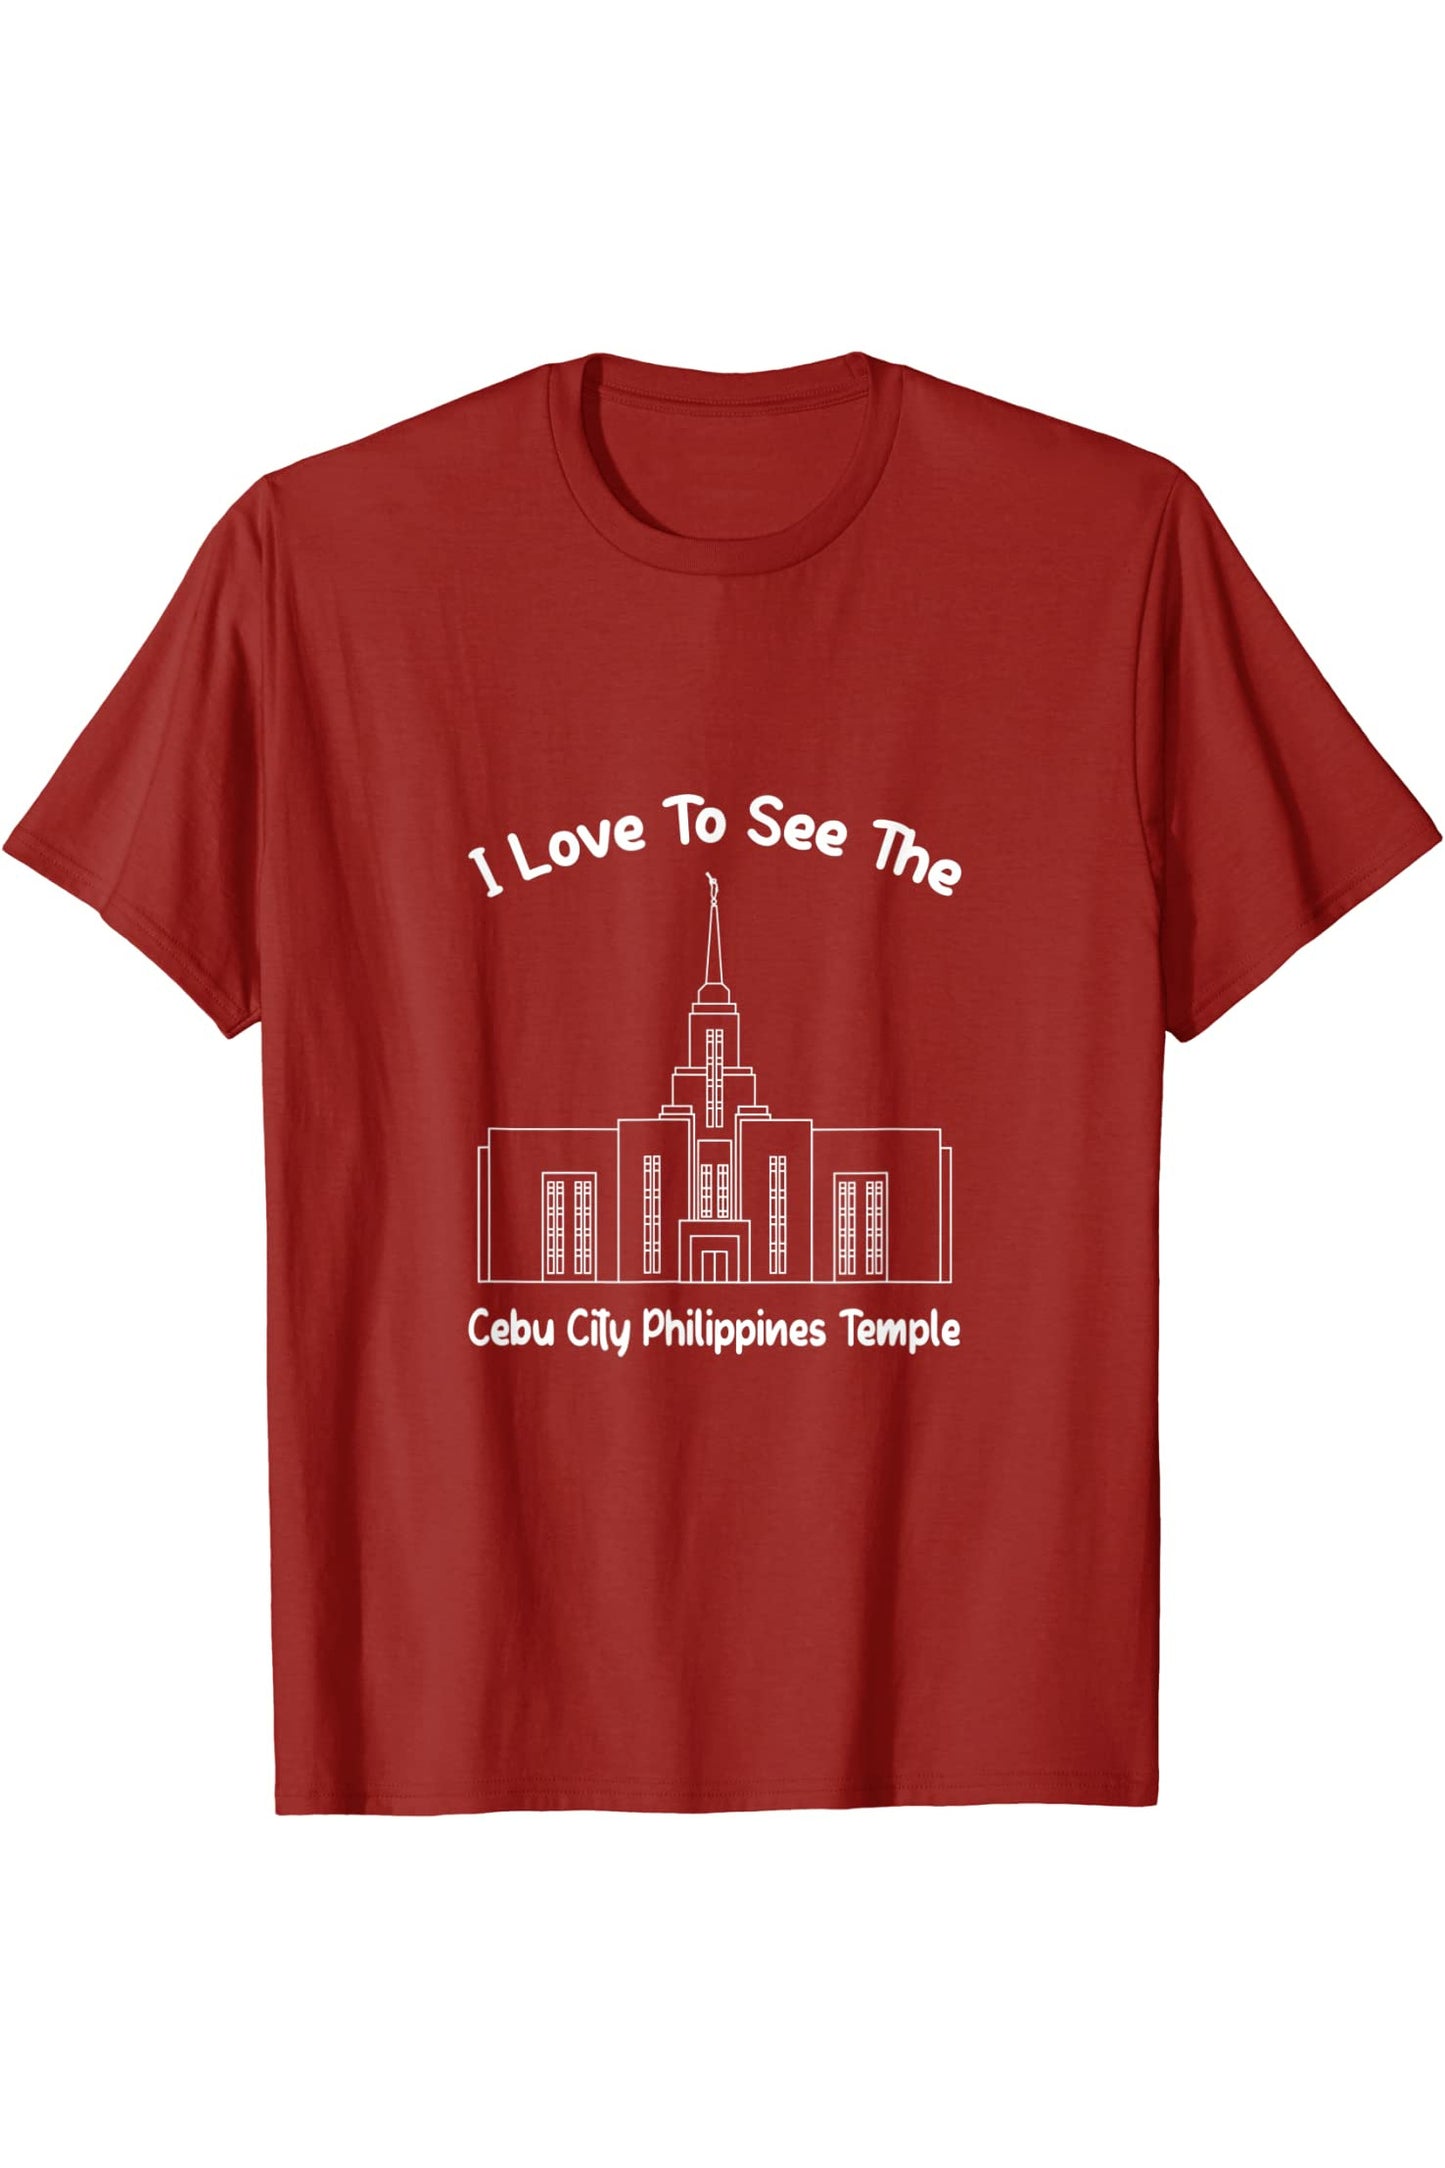 Cebu City Philippines Temple T-Shirt - Primary Style (English) US